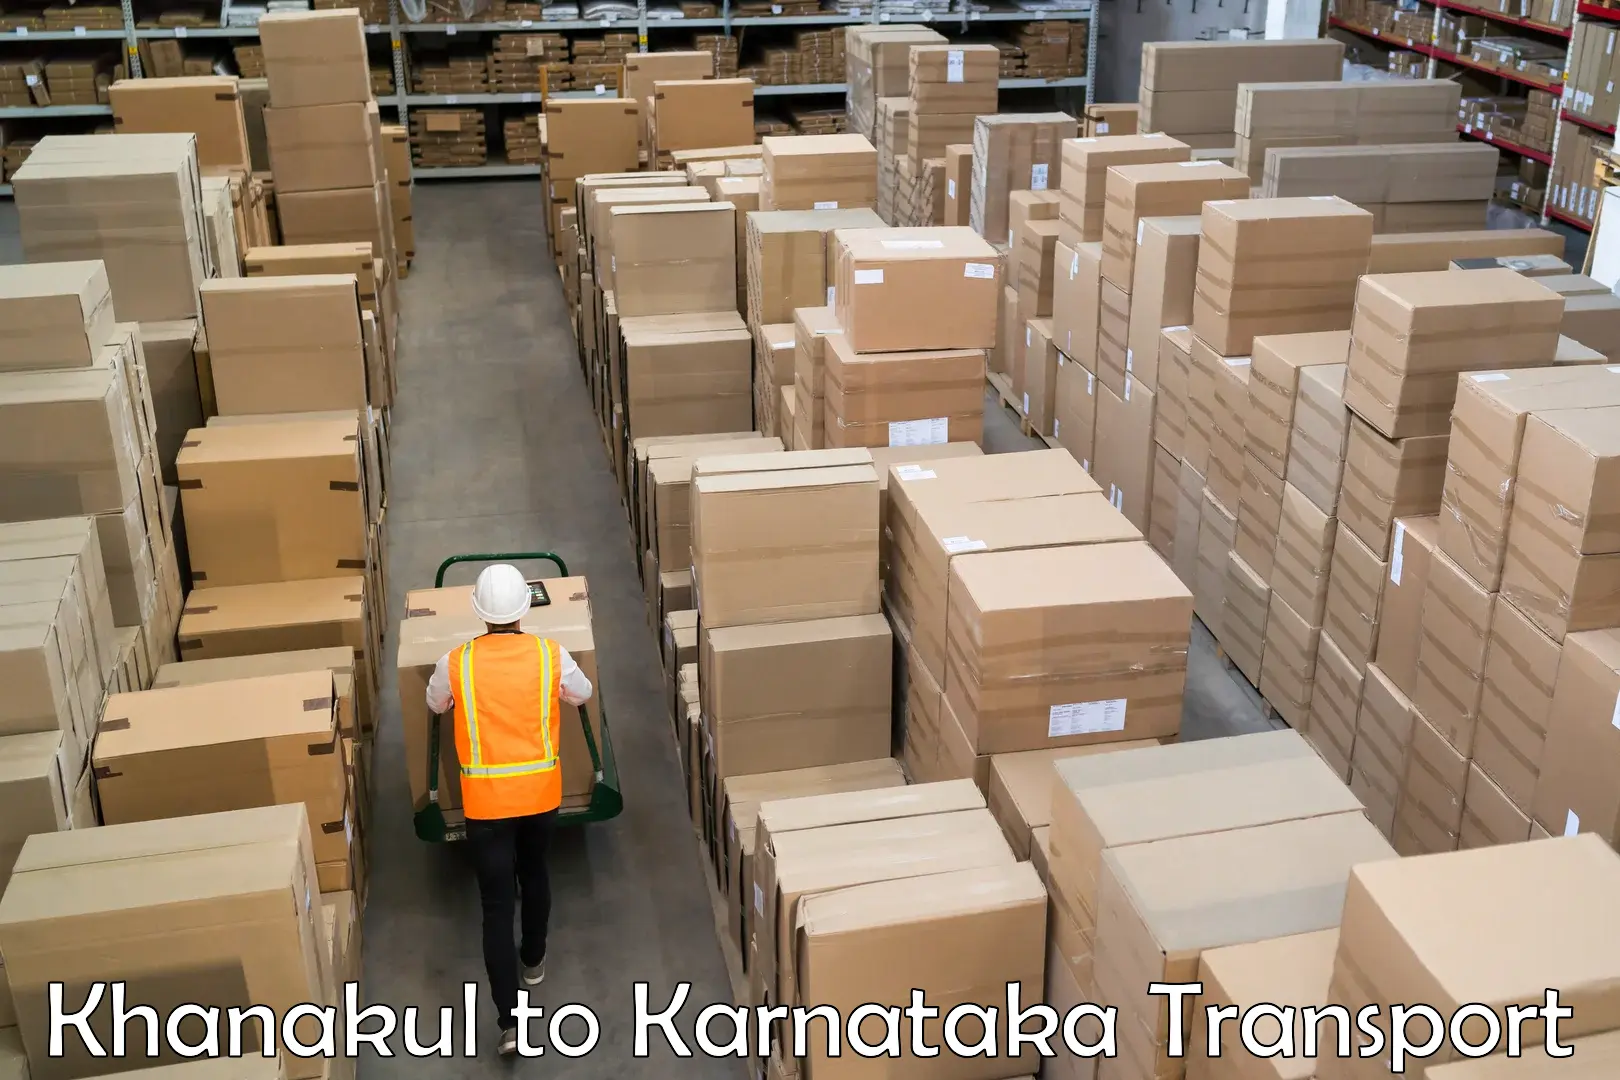 Truck transport companies in India Khanakul to Puttur